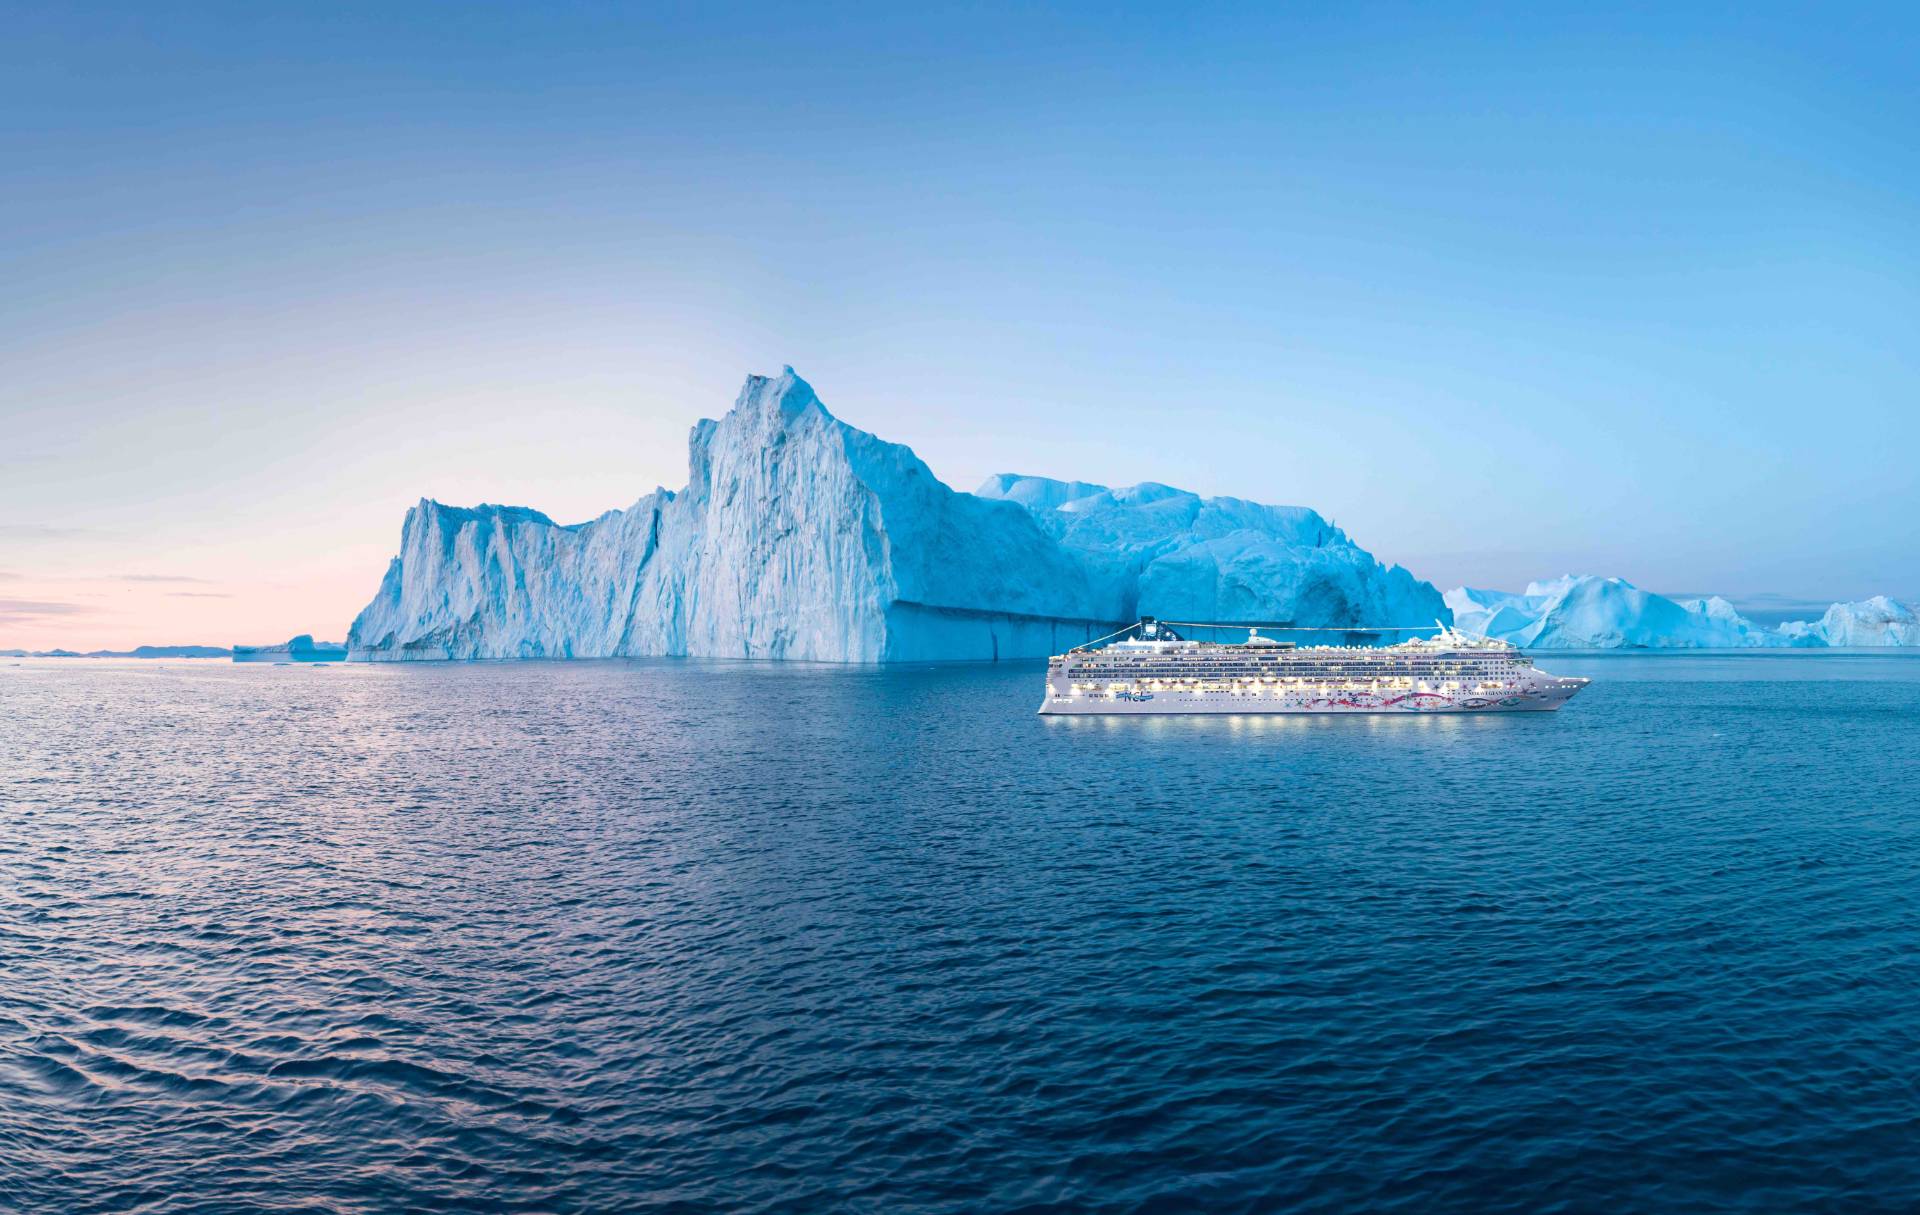 Norwegian Cruise Line's 20 new destinations, Greenland to Antarctica